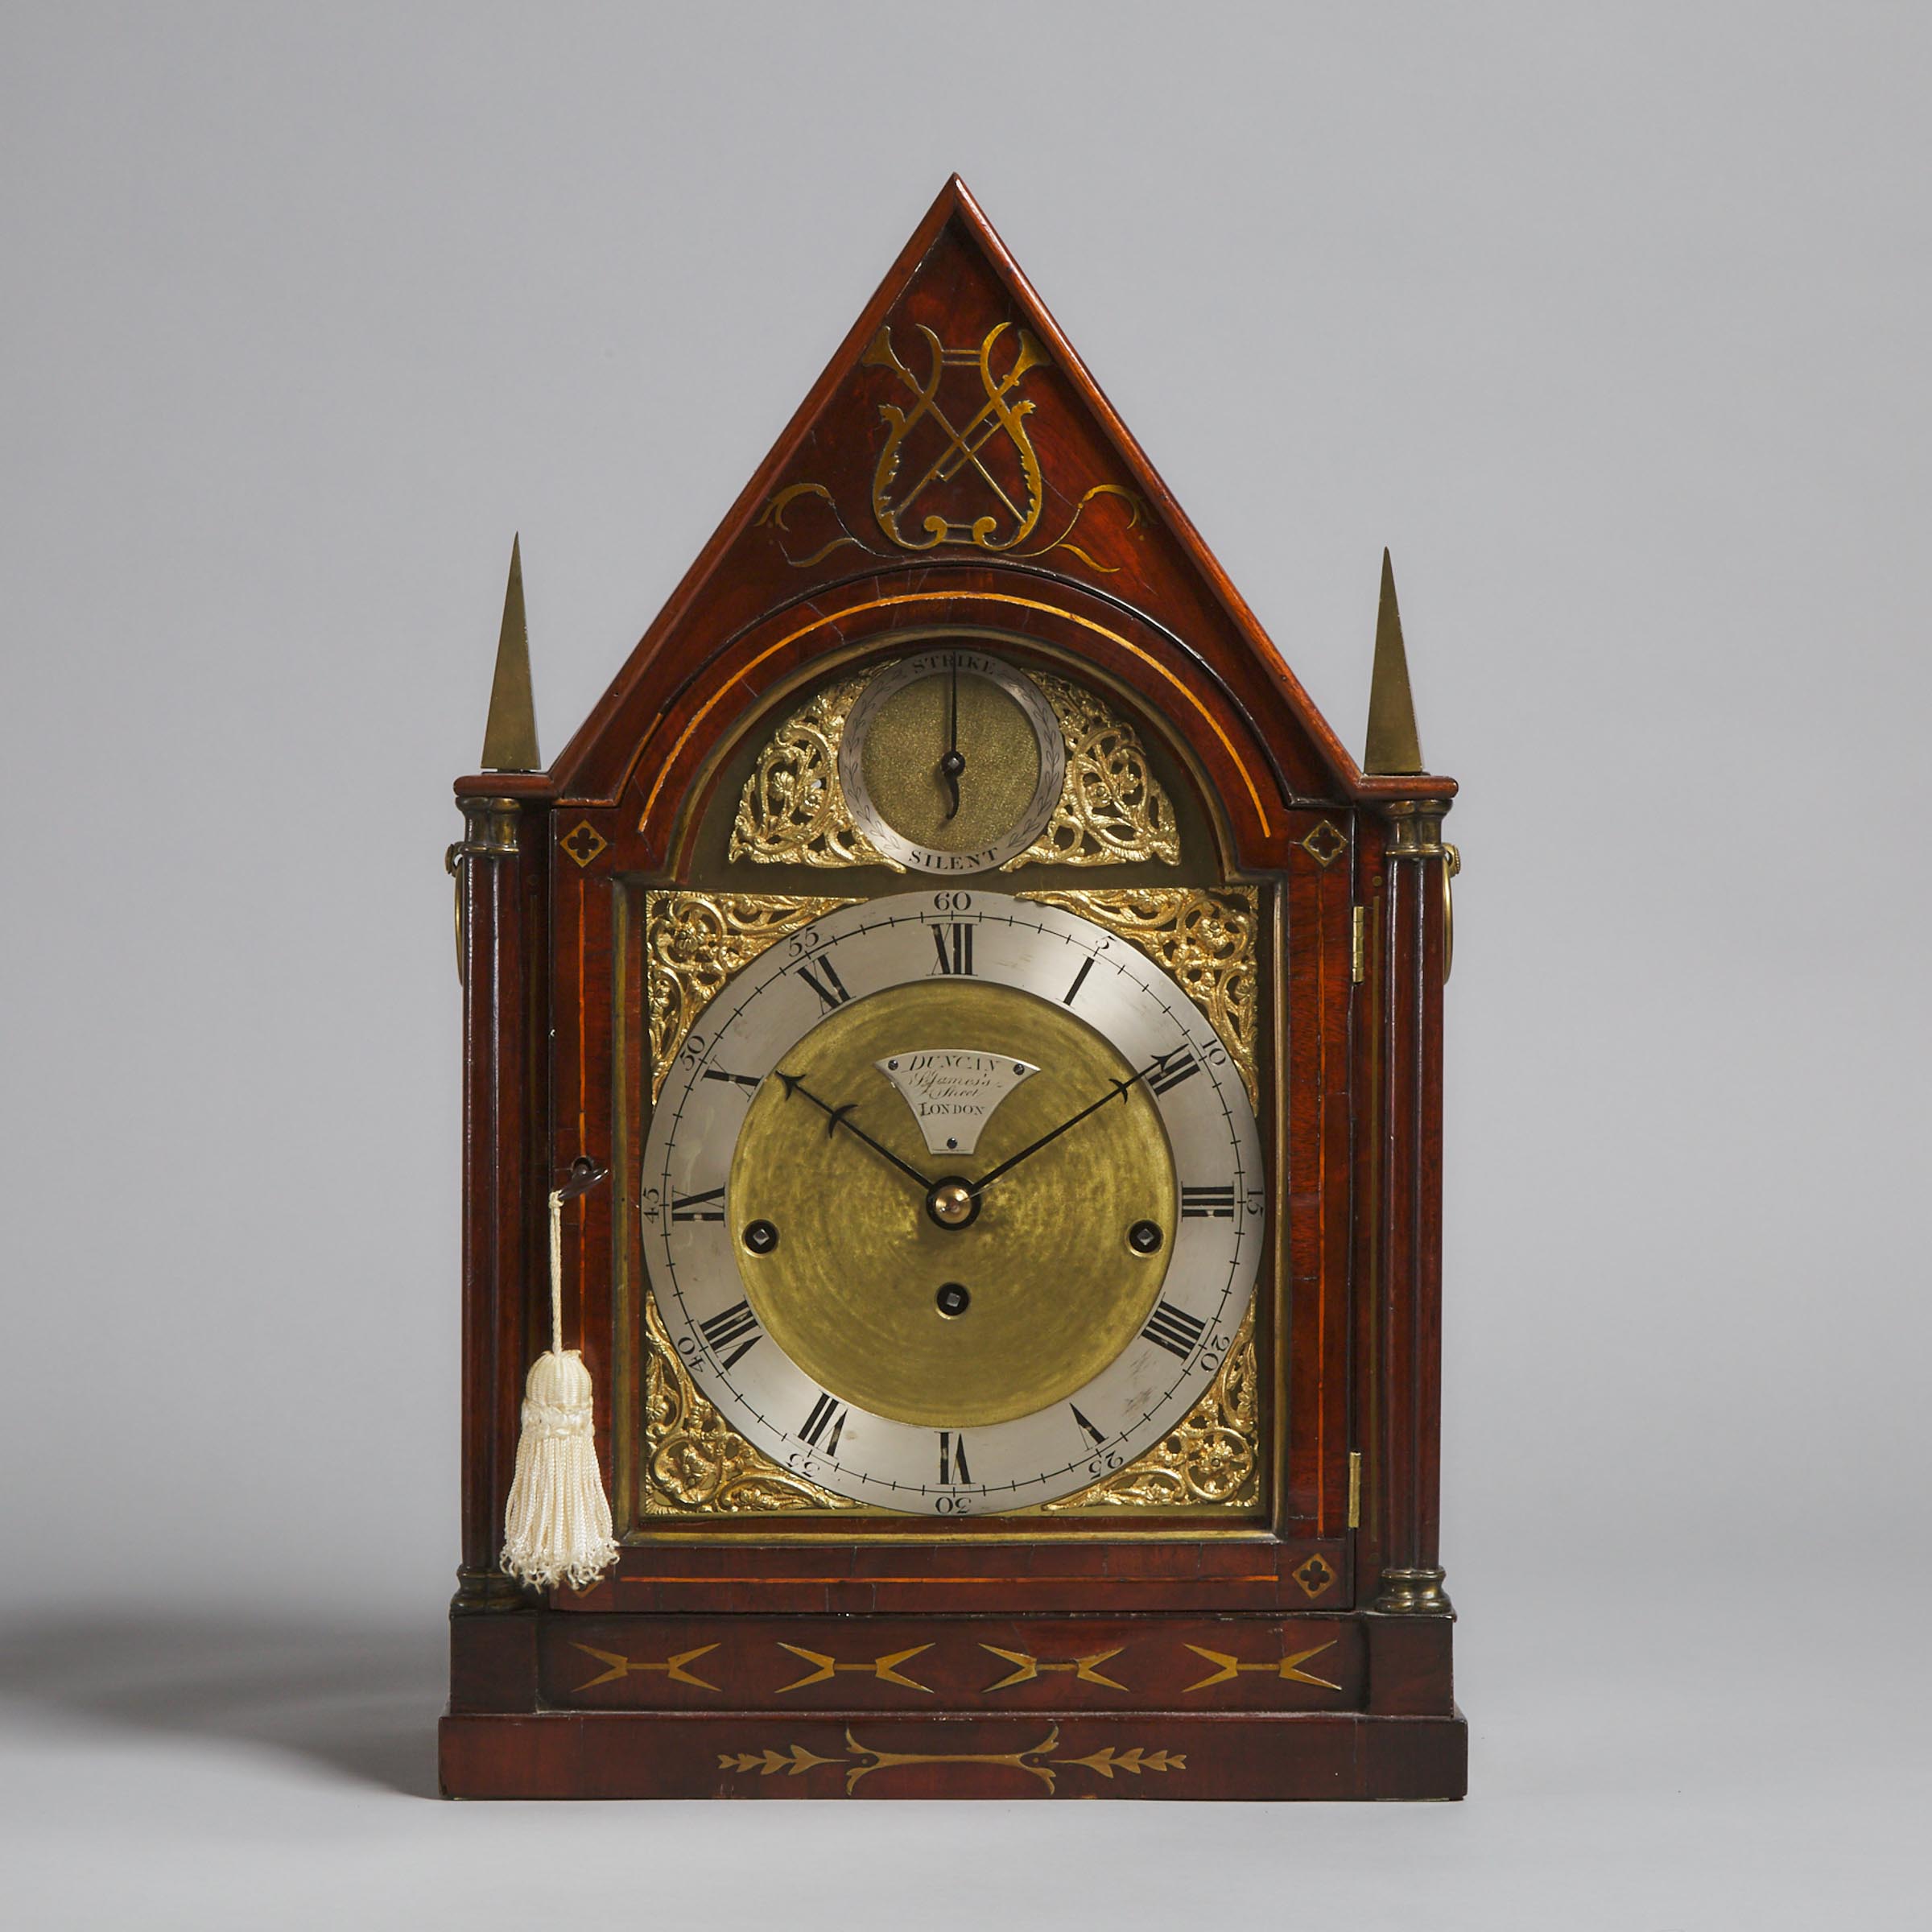 English Regency Brass Inlaid Mahogany Musical Bracket Clock, James Duncan, St. James's Street, London, c.1820